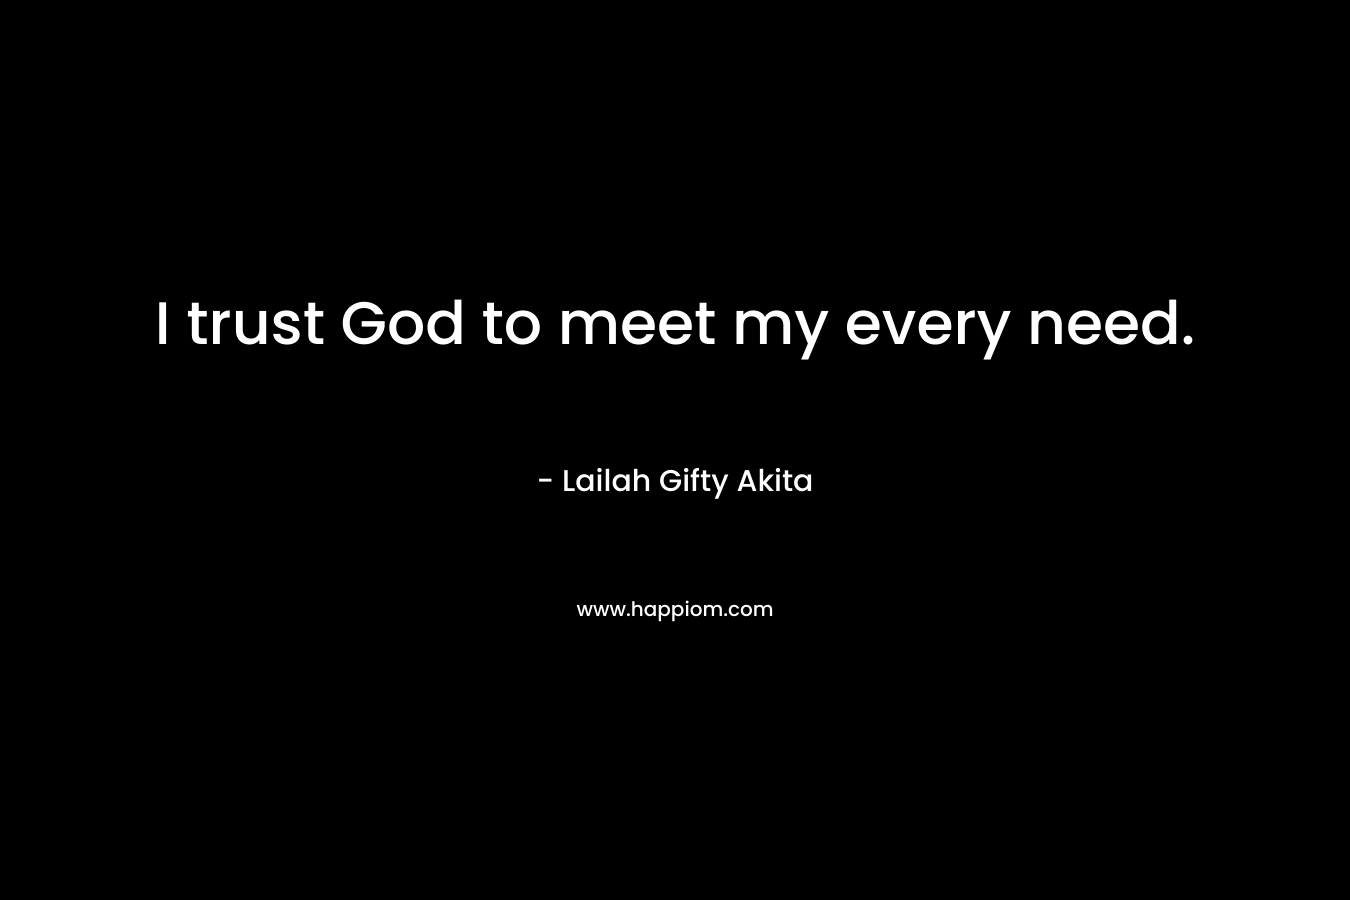 I trust God to meet my every need.